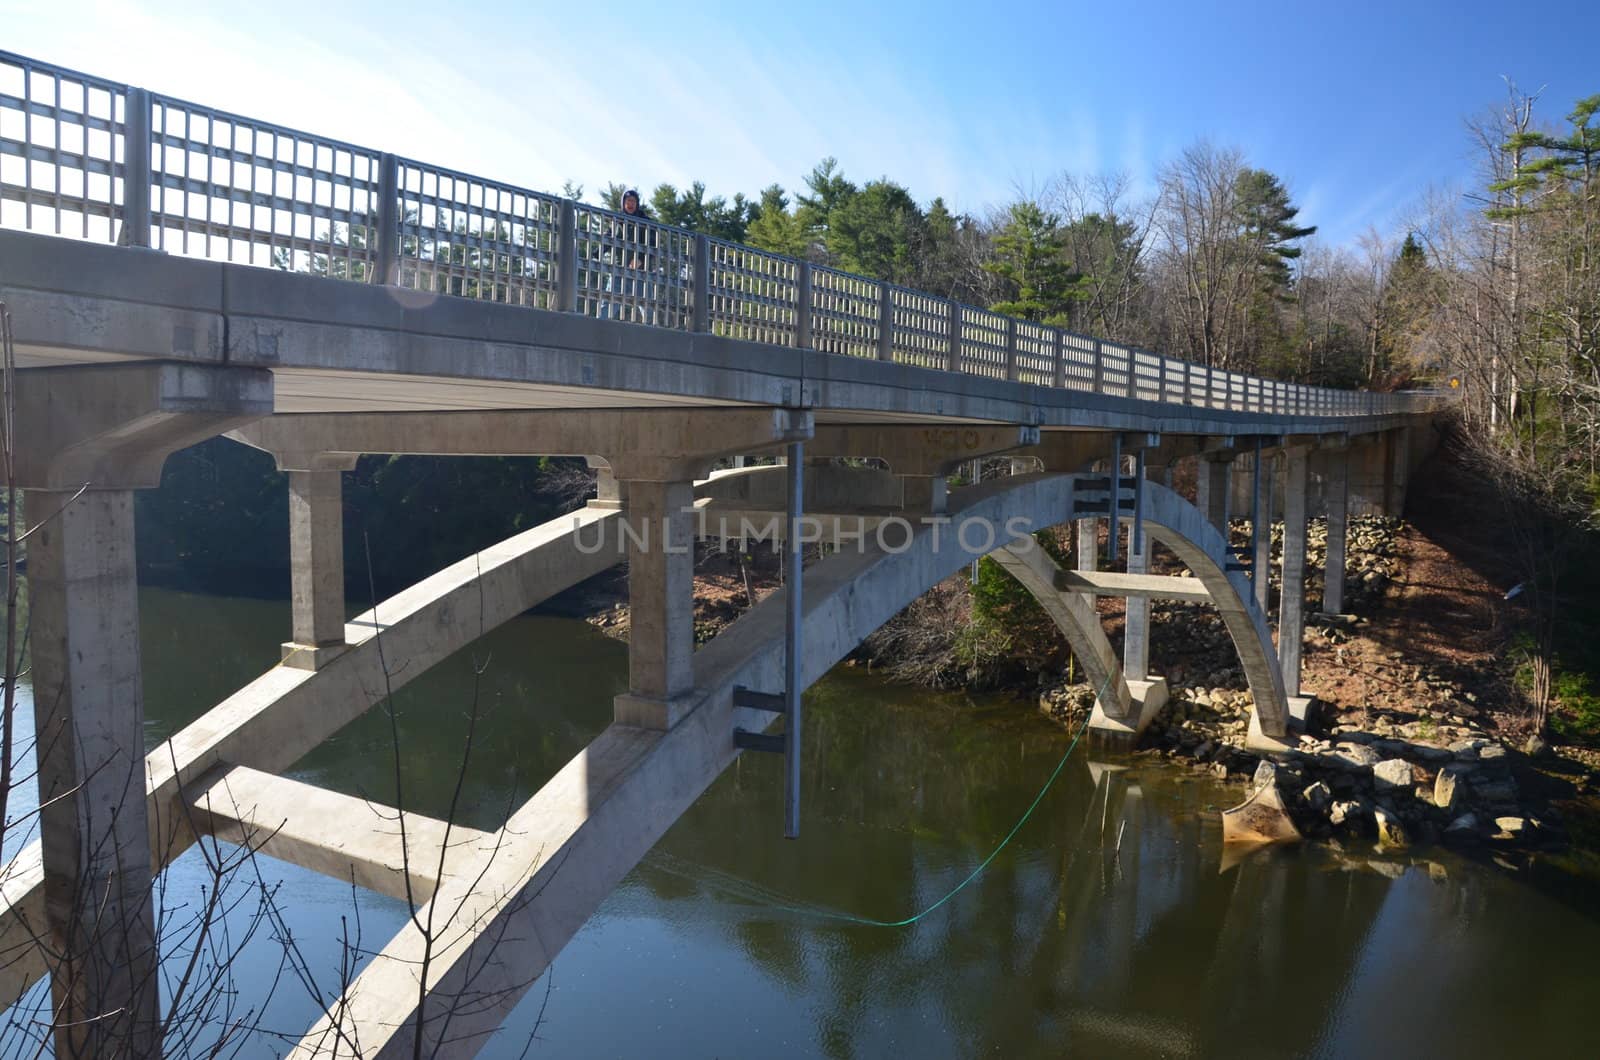 Bridge across a river in Maine.